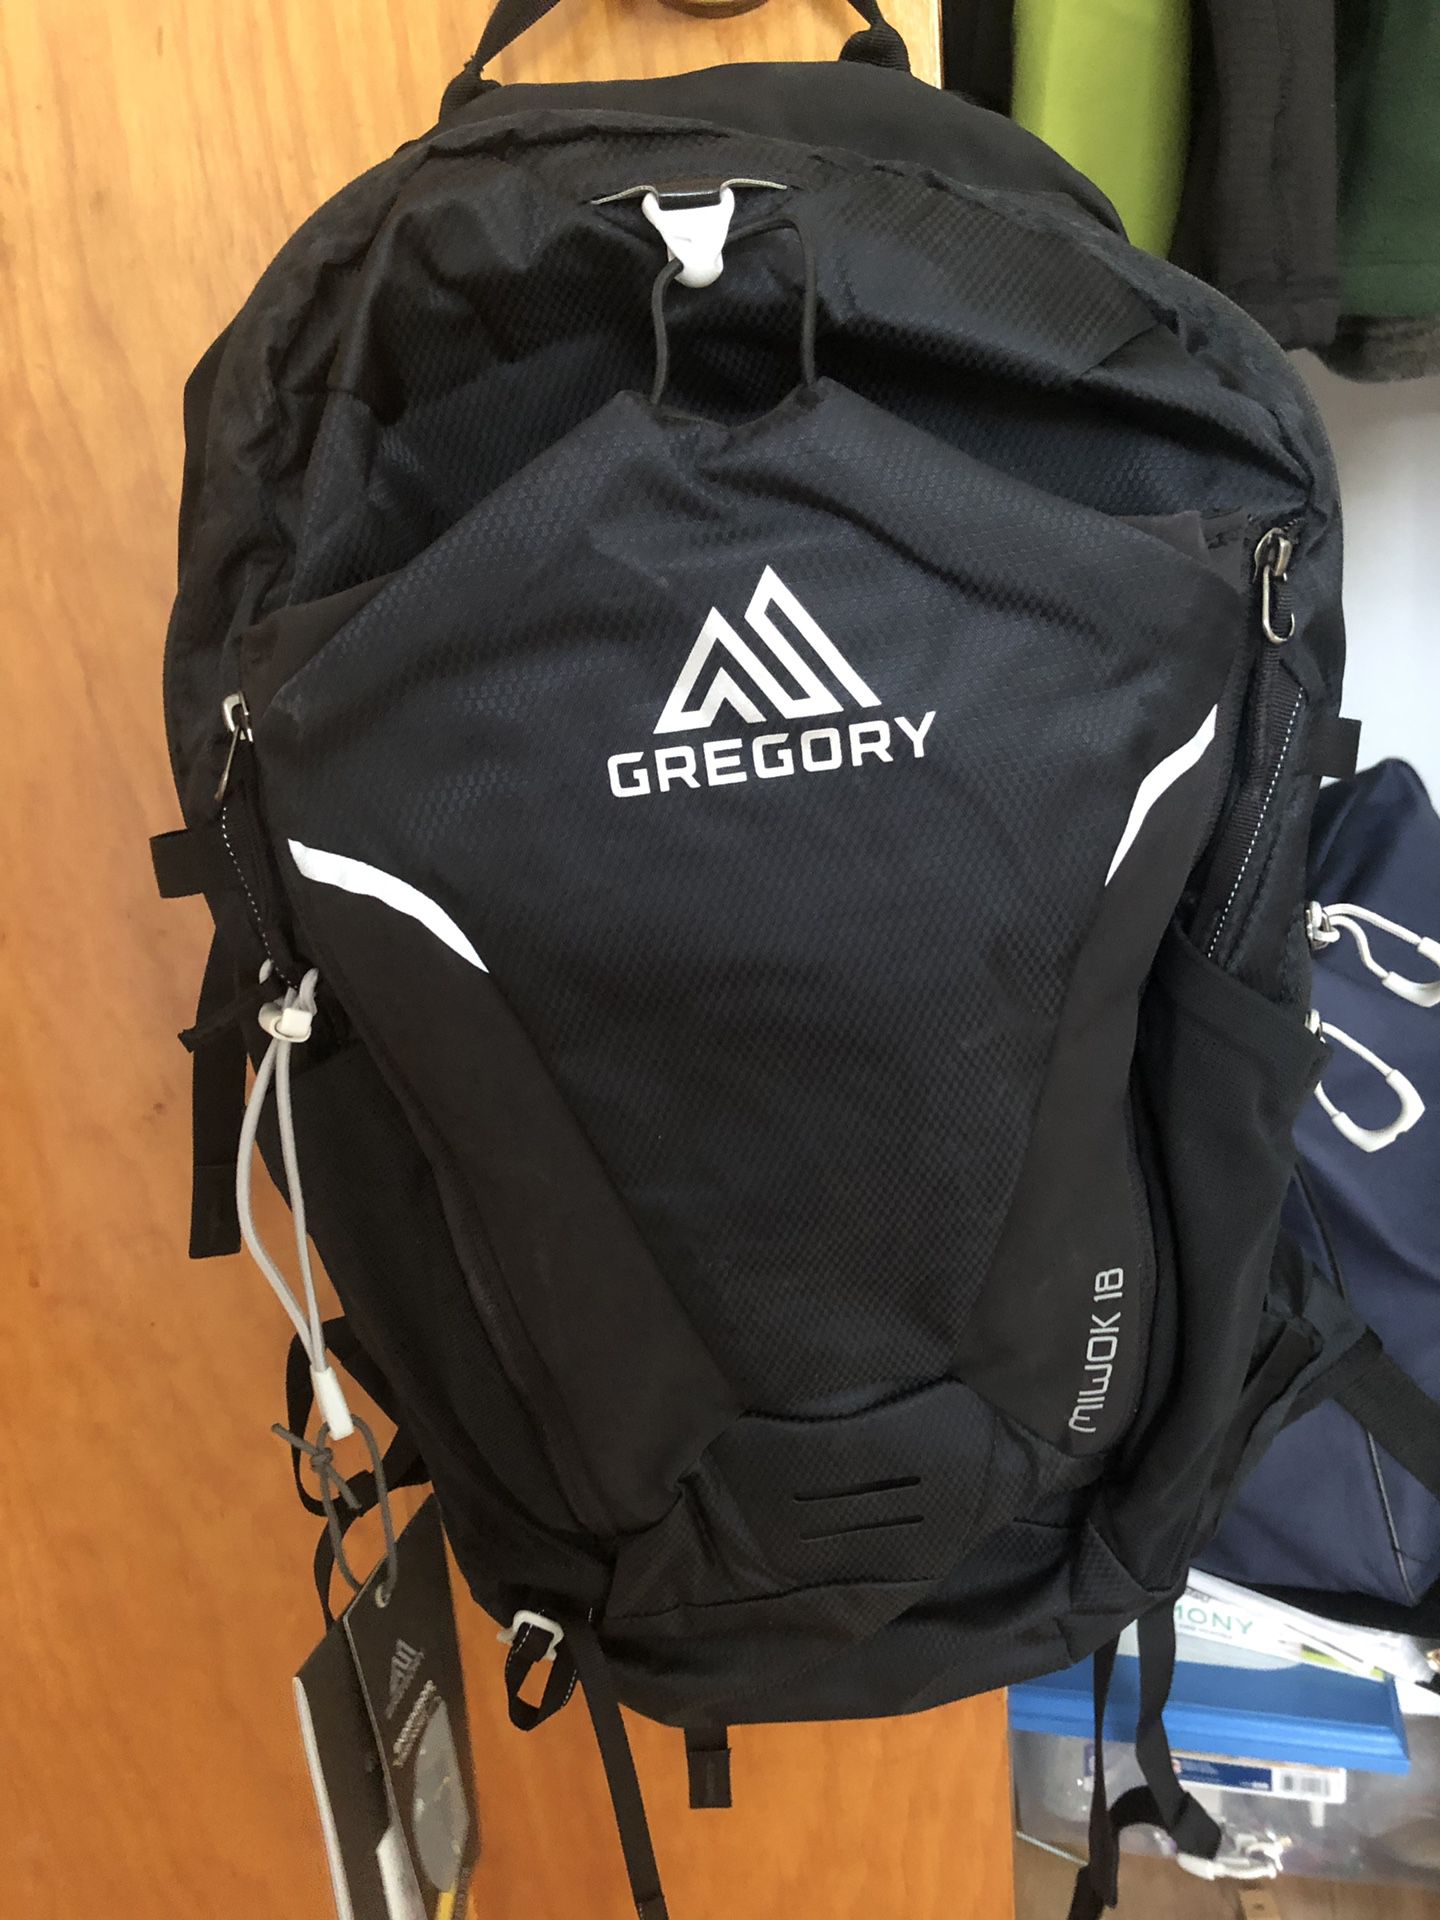 Gregory hiking backpack